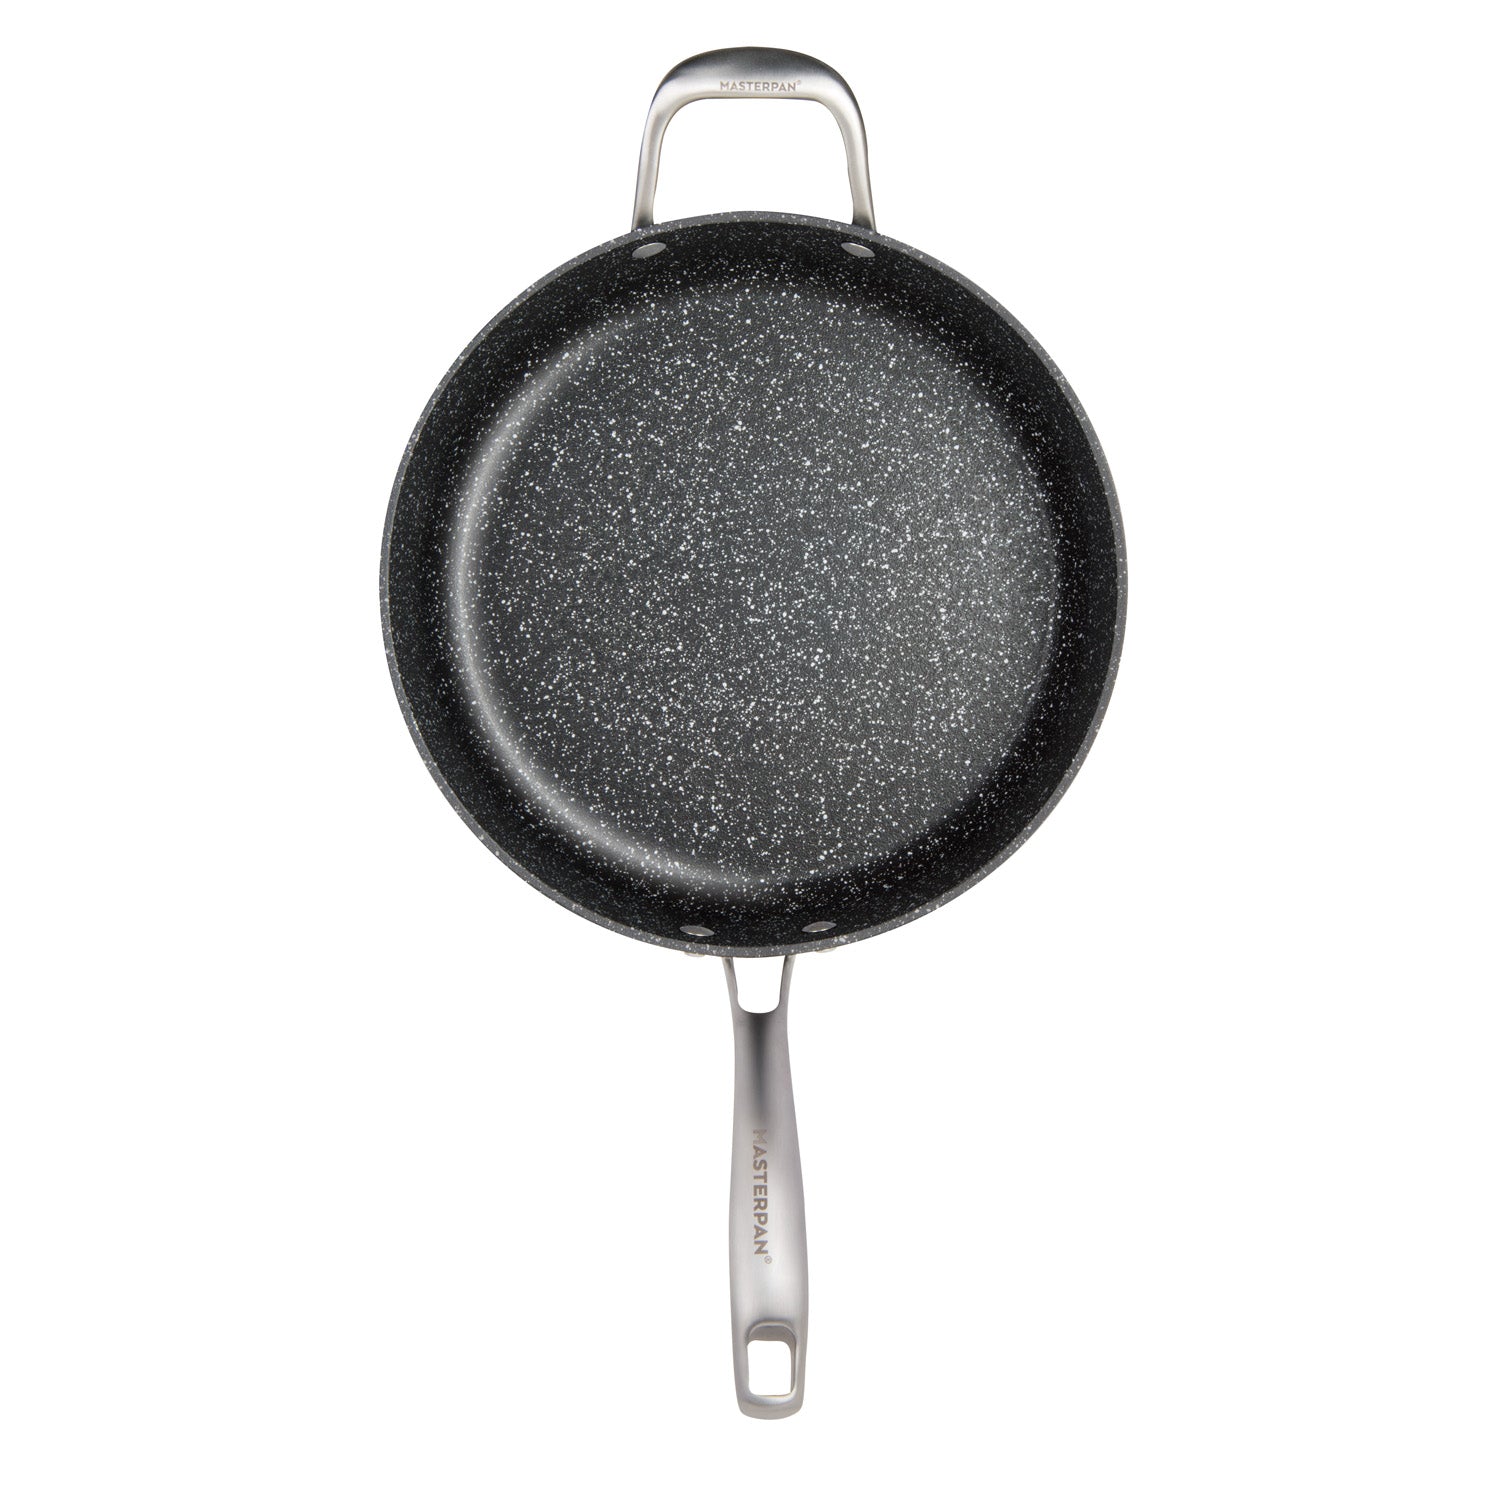 MasterPan Granite Ultra Non-Stick Cast Aluminum Saute Pan with Glass Lid 11 Black